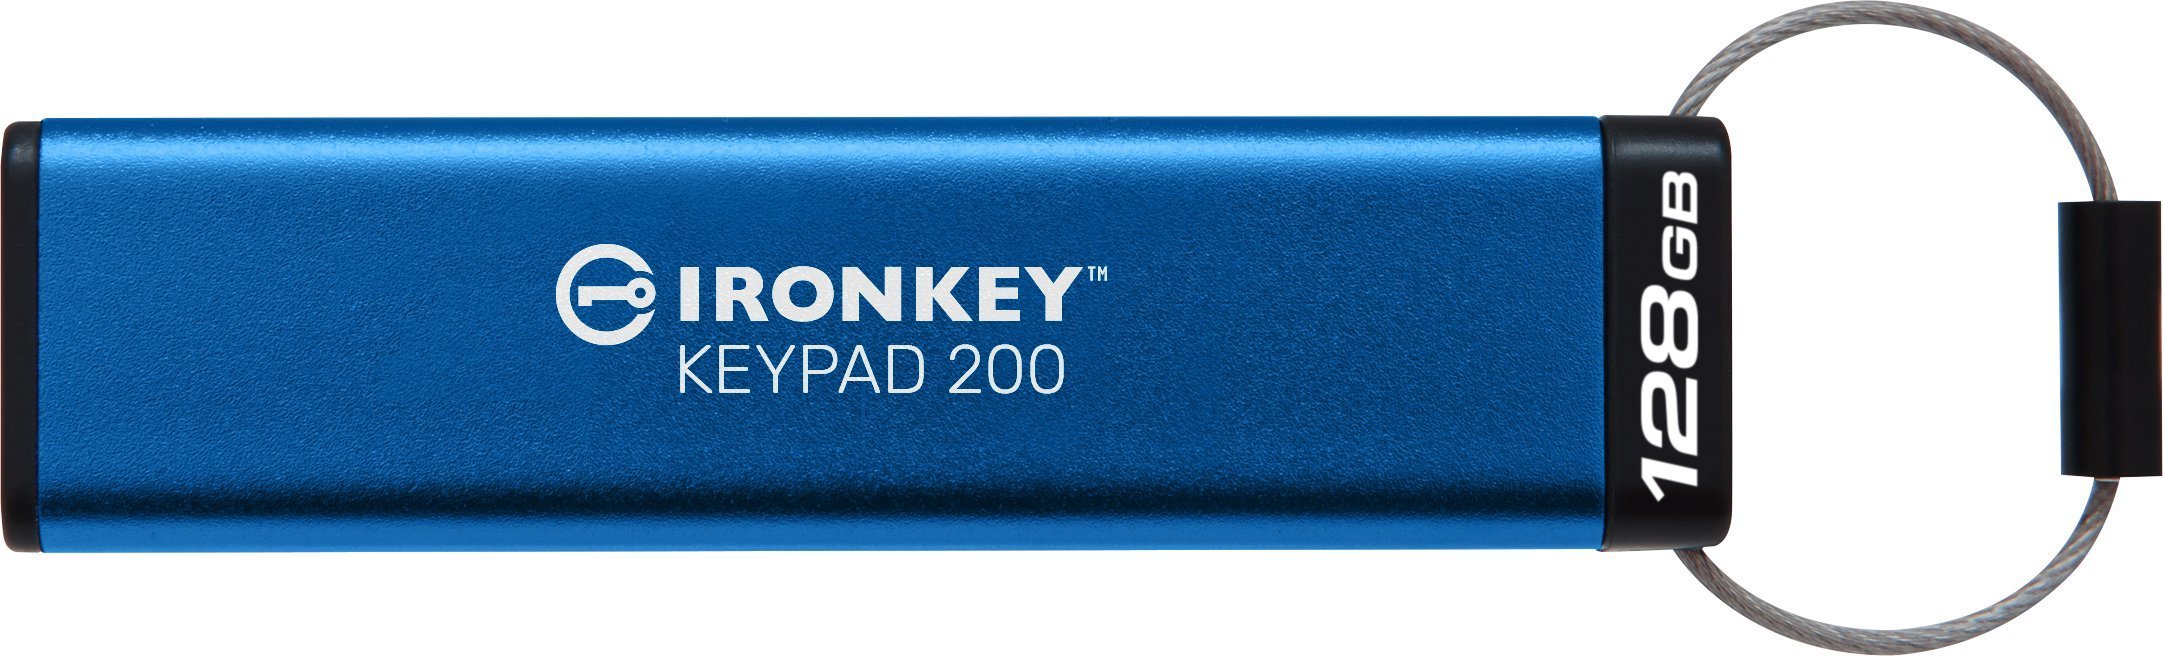 Kingston IronKey Keypad 200 Pen Drive 128GB (IKKP200/128GB)